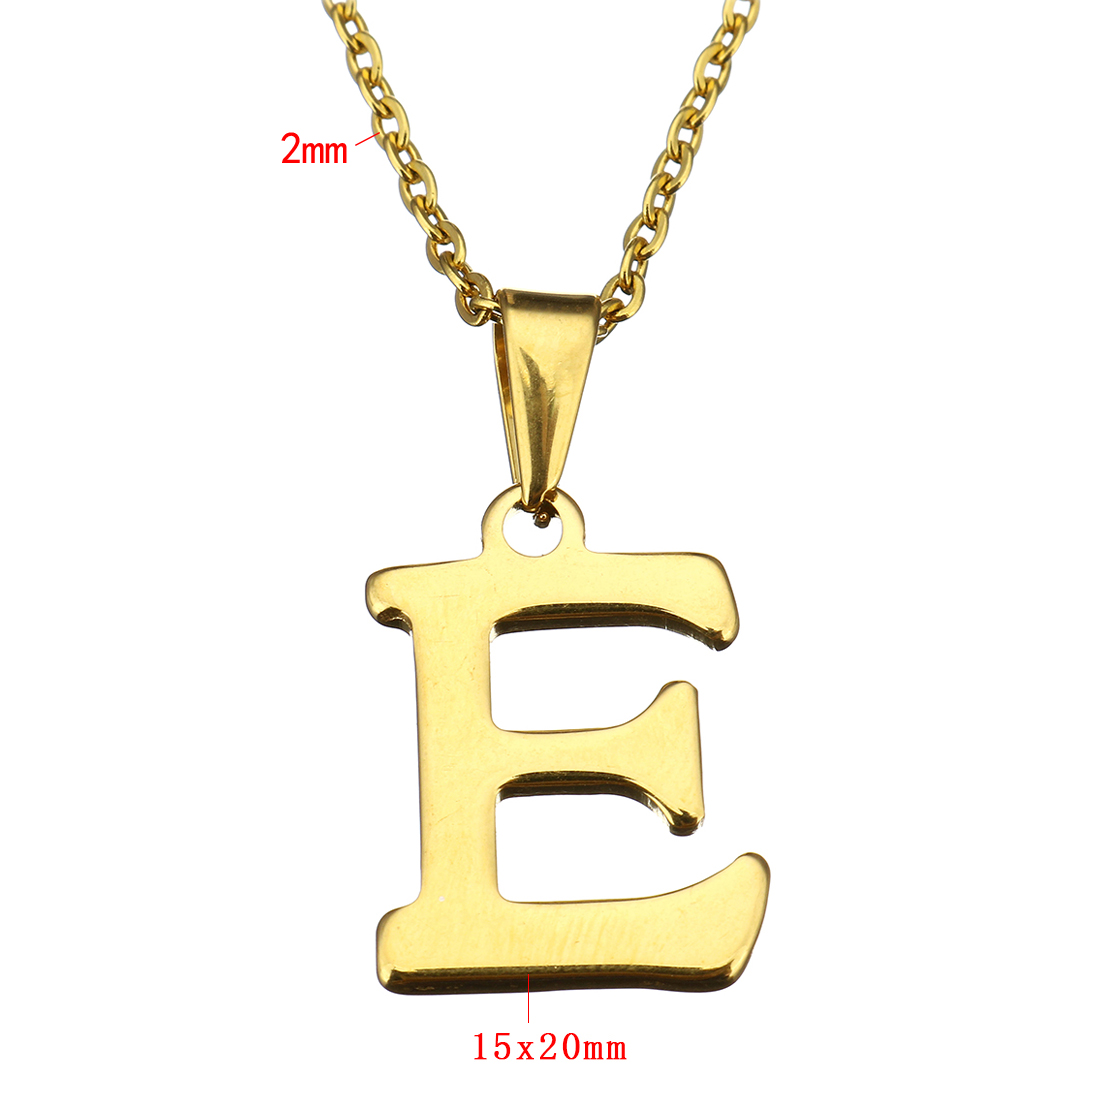 5:Letter E